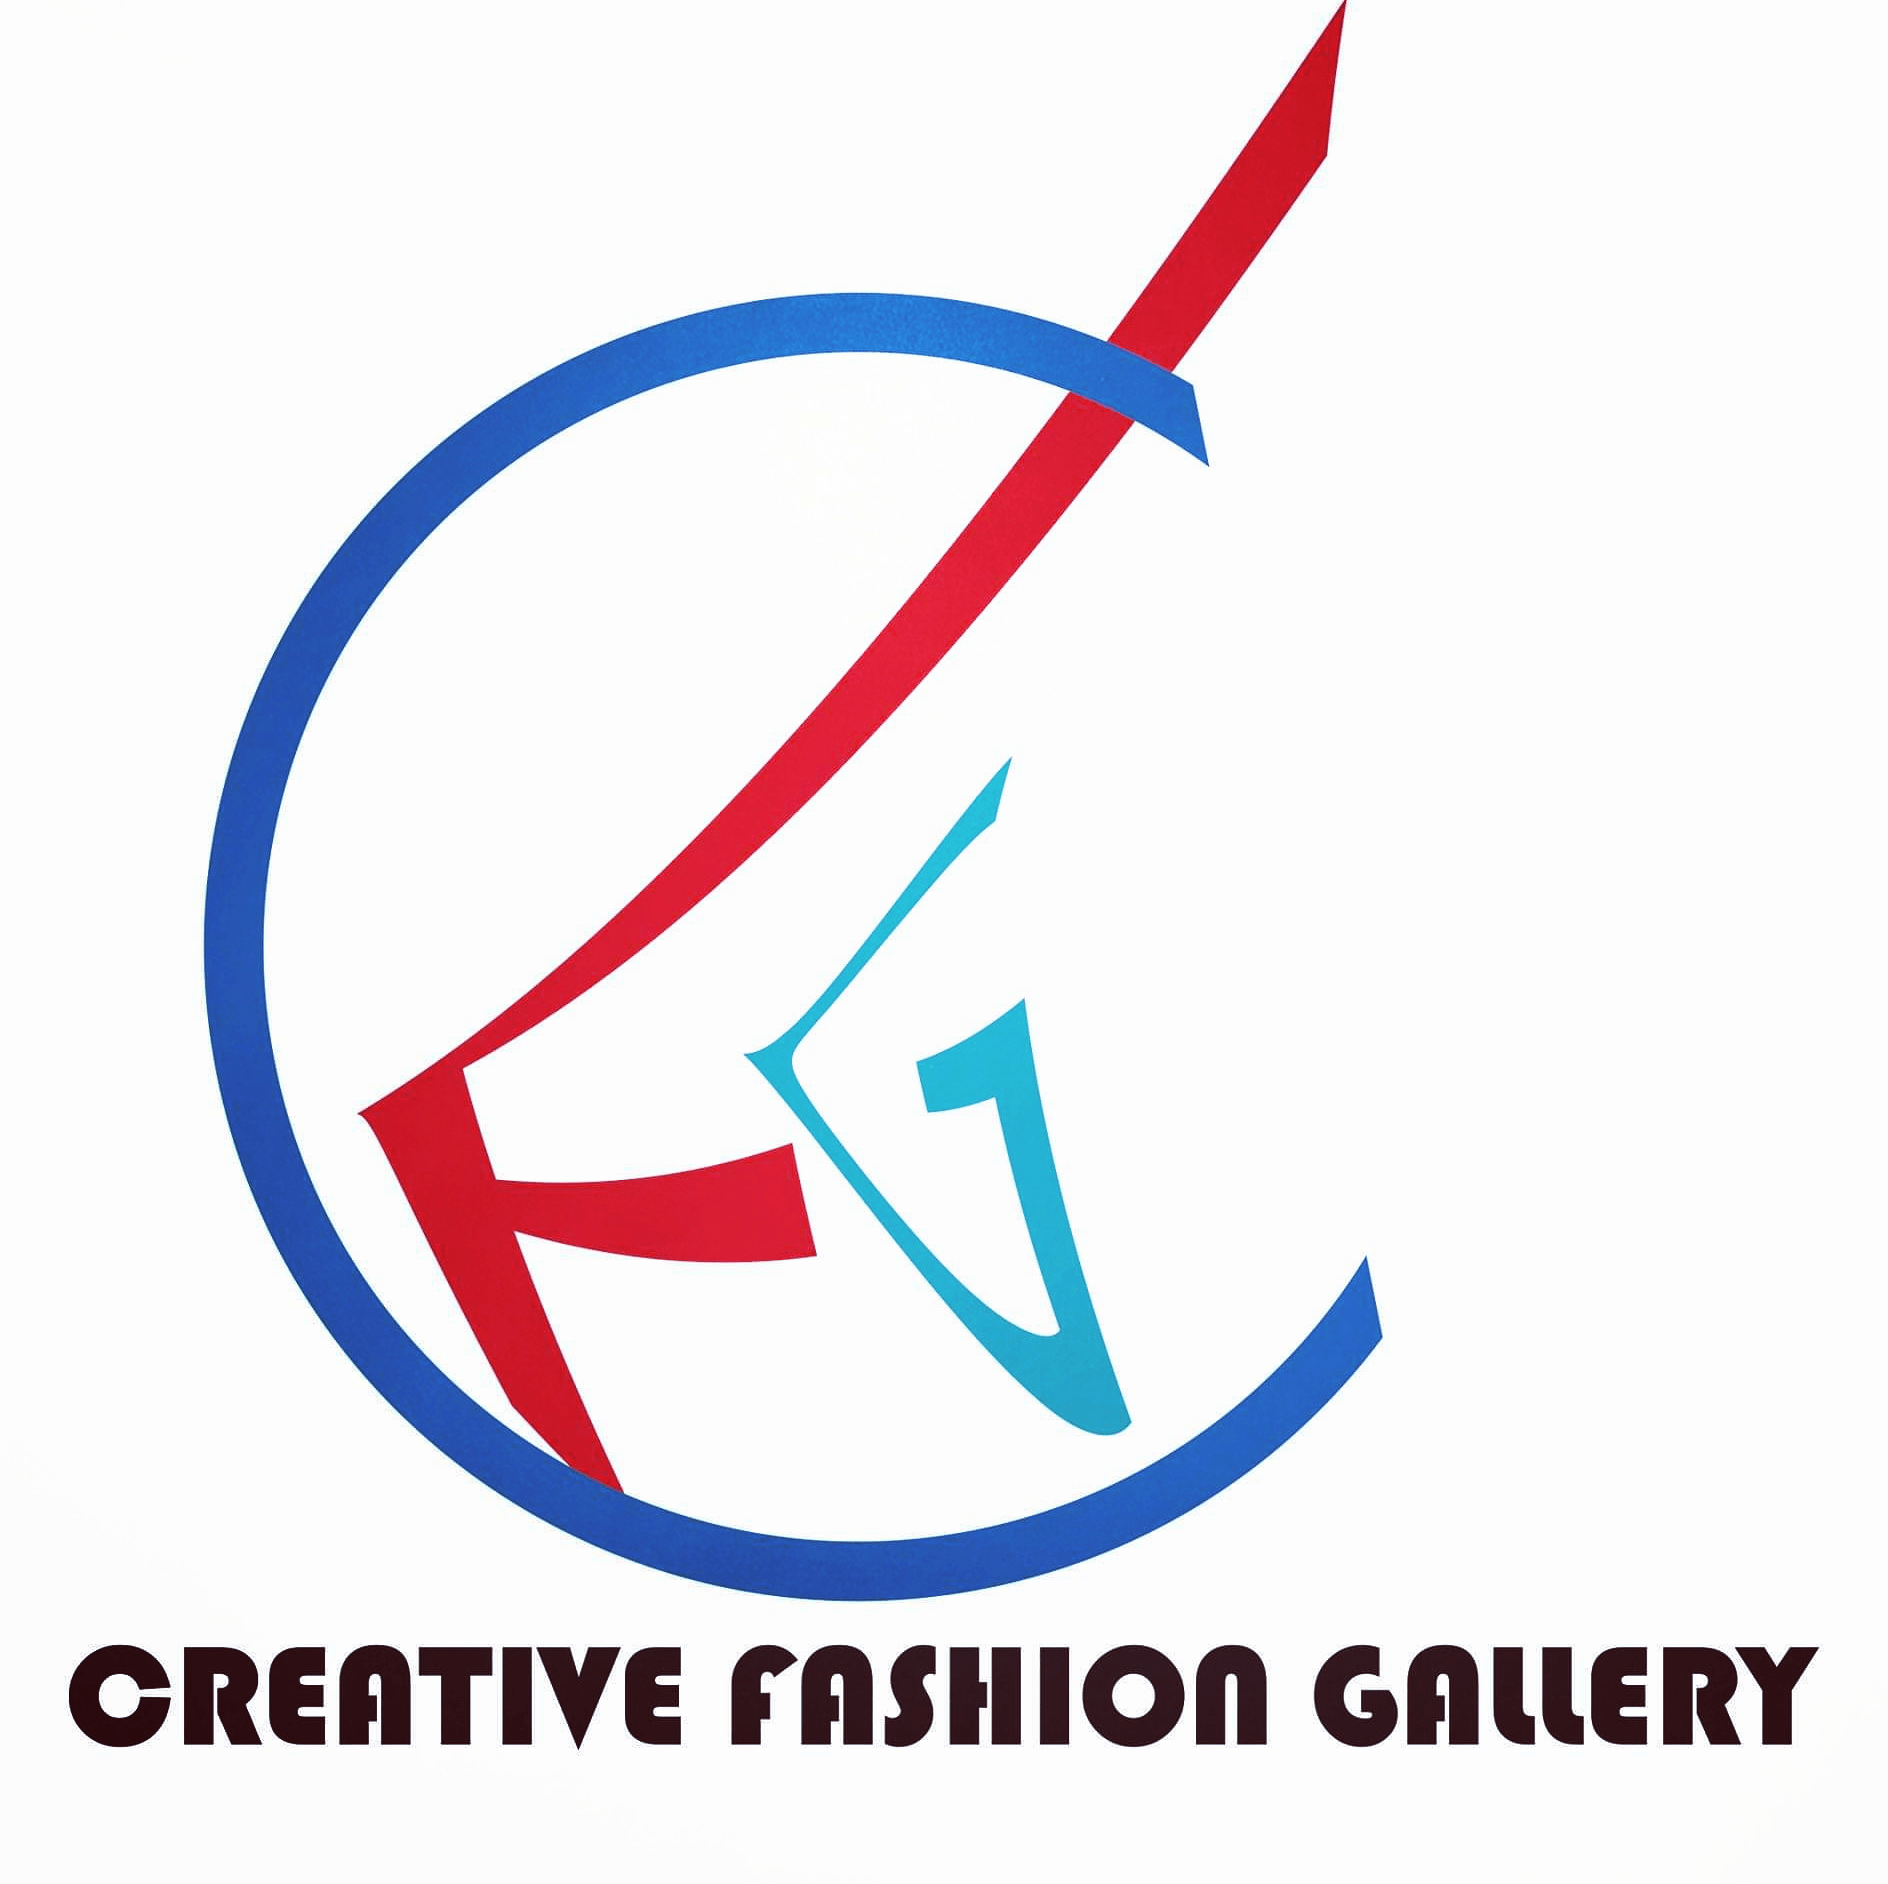 Creative Fashion Gallery